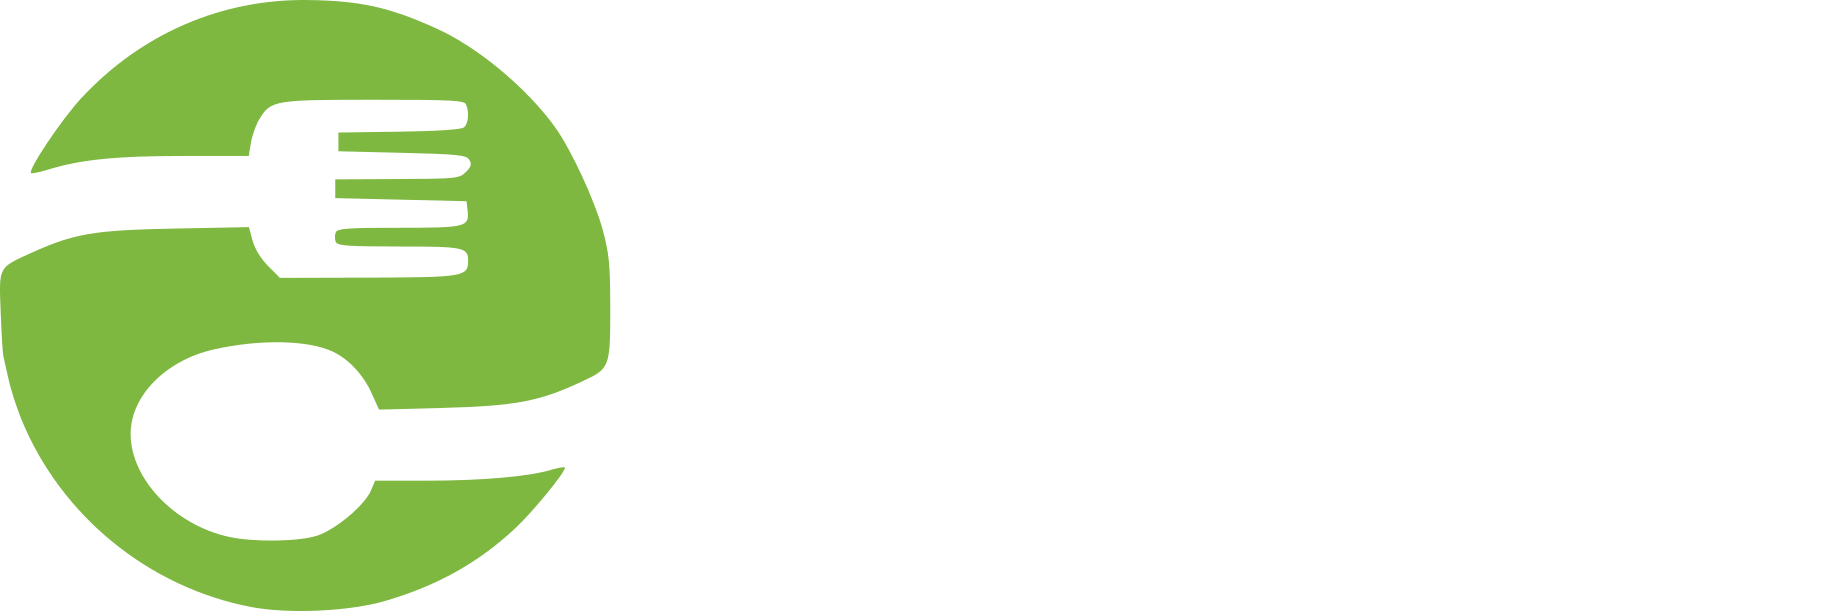 rmda_logo